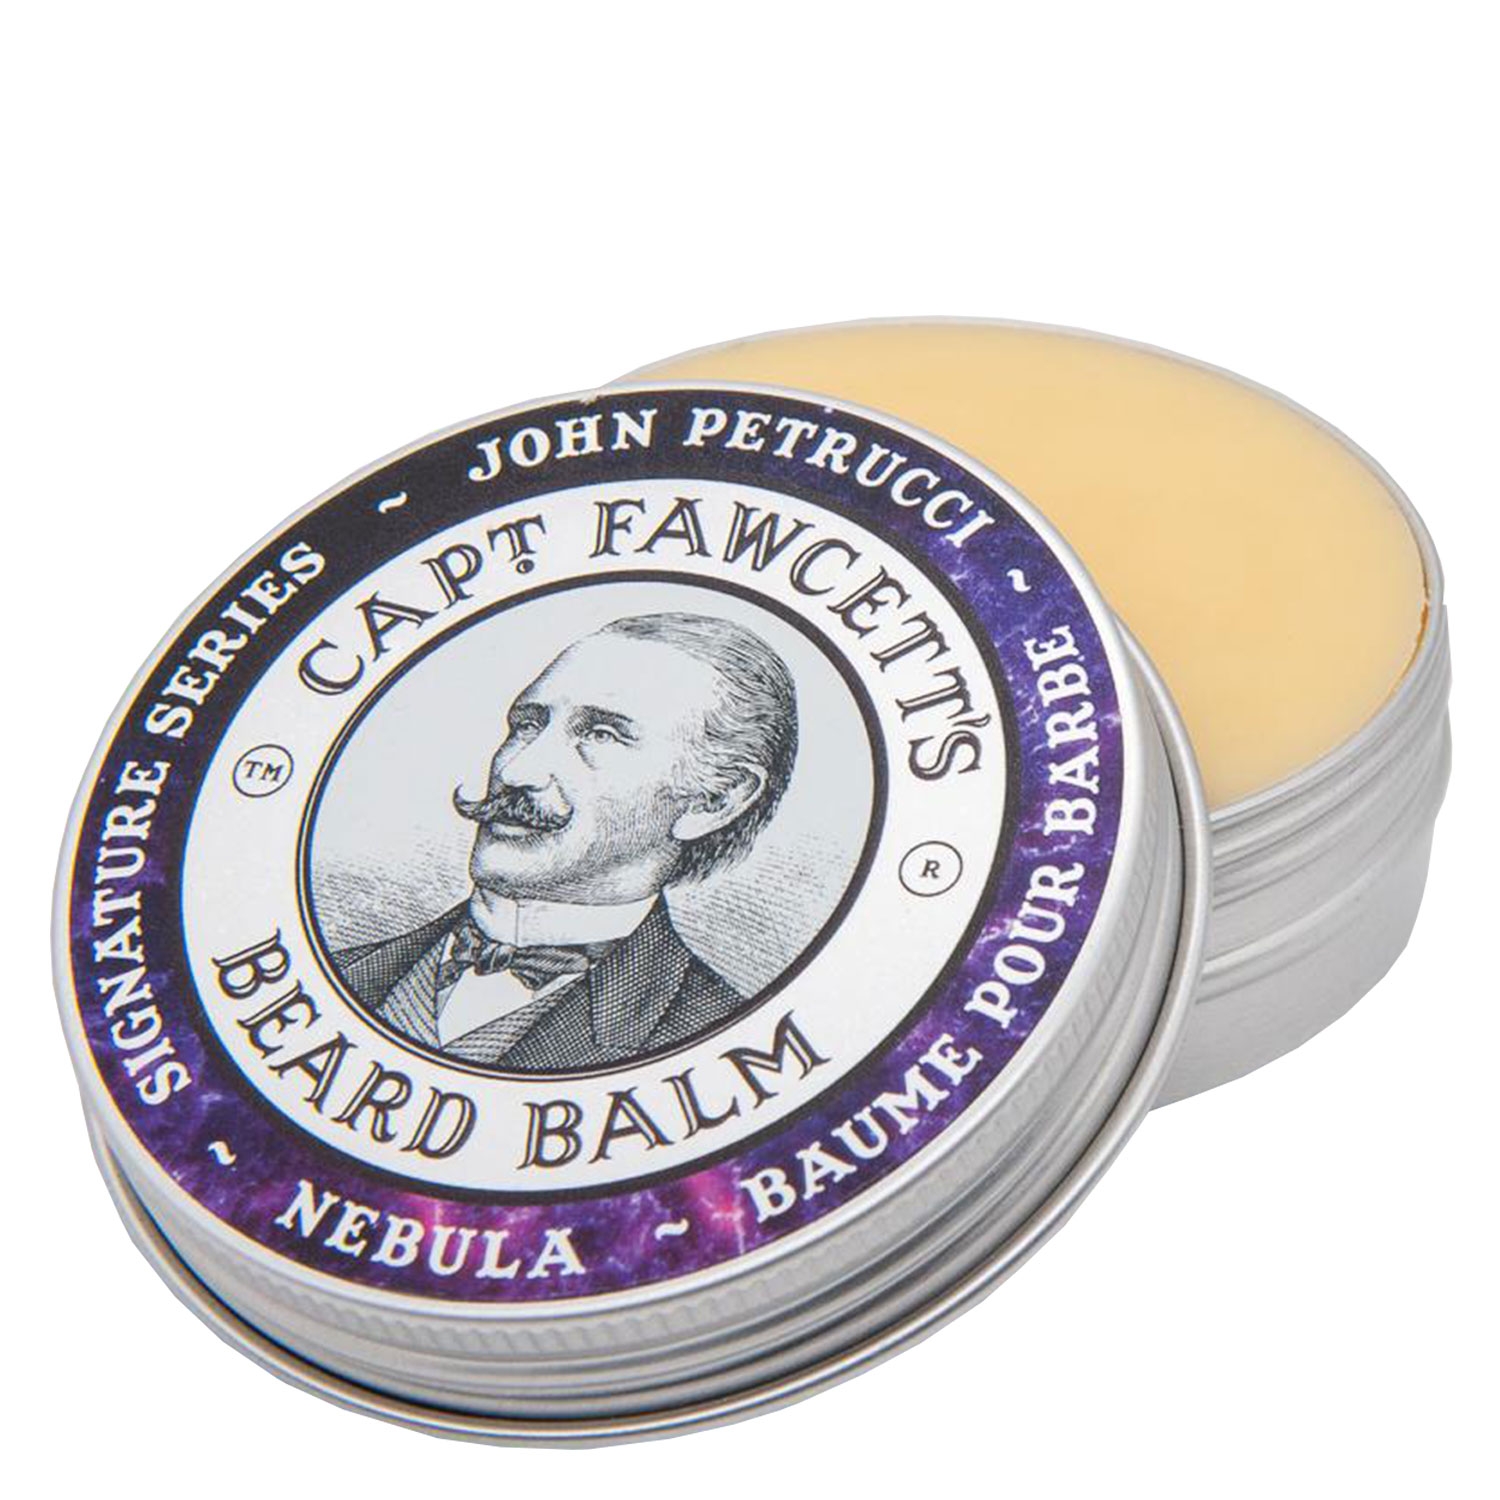 Product image from Capt. Fawcett Care - Nebula Beard Balm